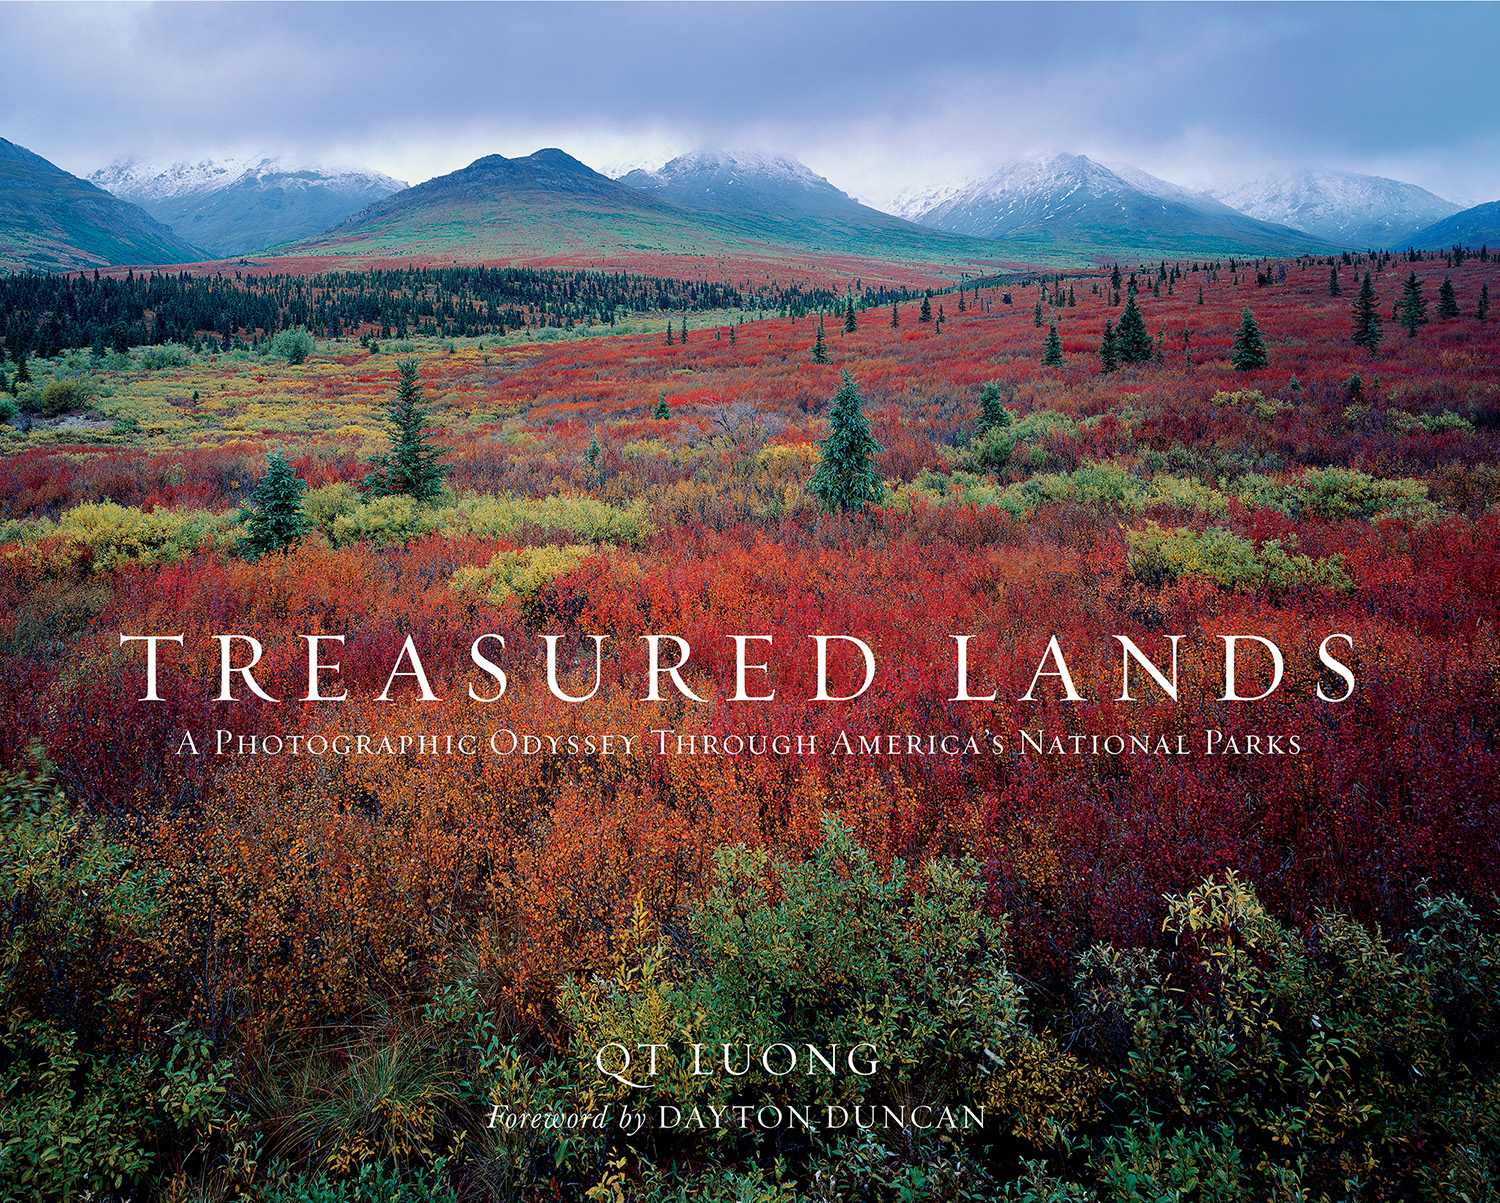 Treasure land. Leisure by w.h Davies. Leasure -w/h Davis. Фотография Lands Day. Дункан Камерон канадский музеолог.